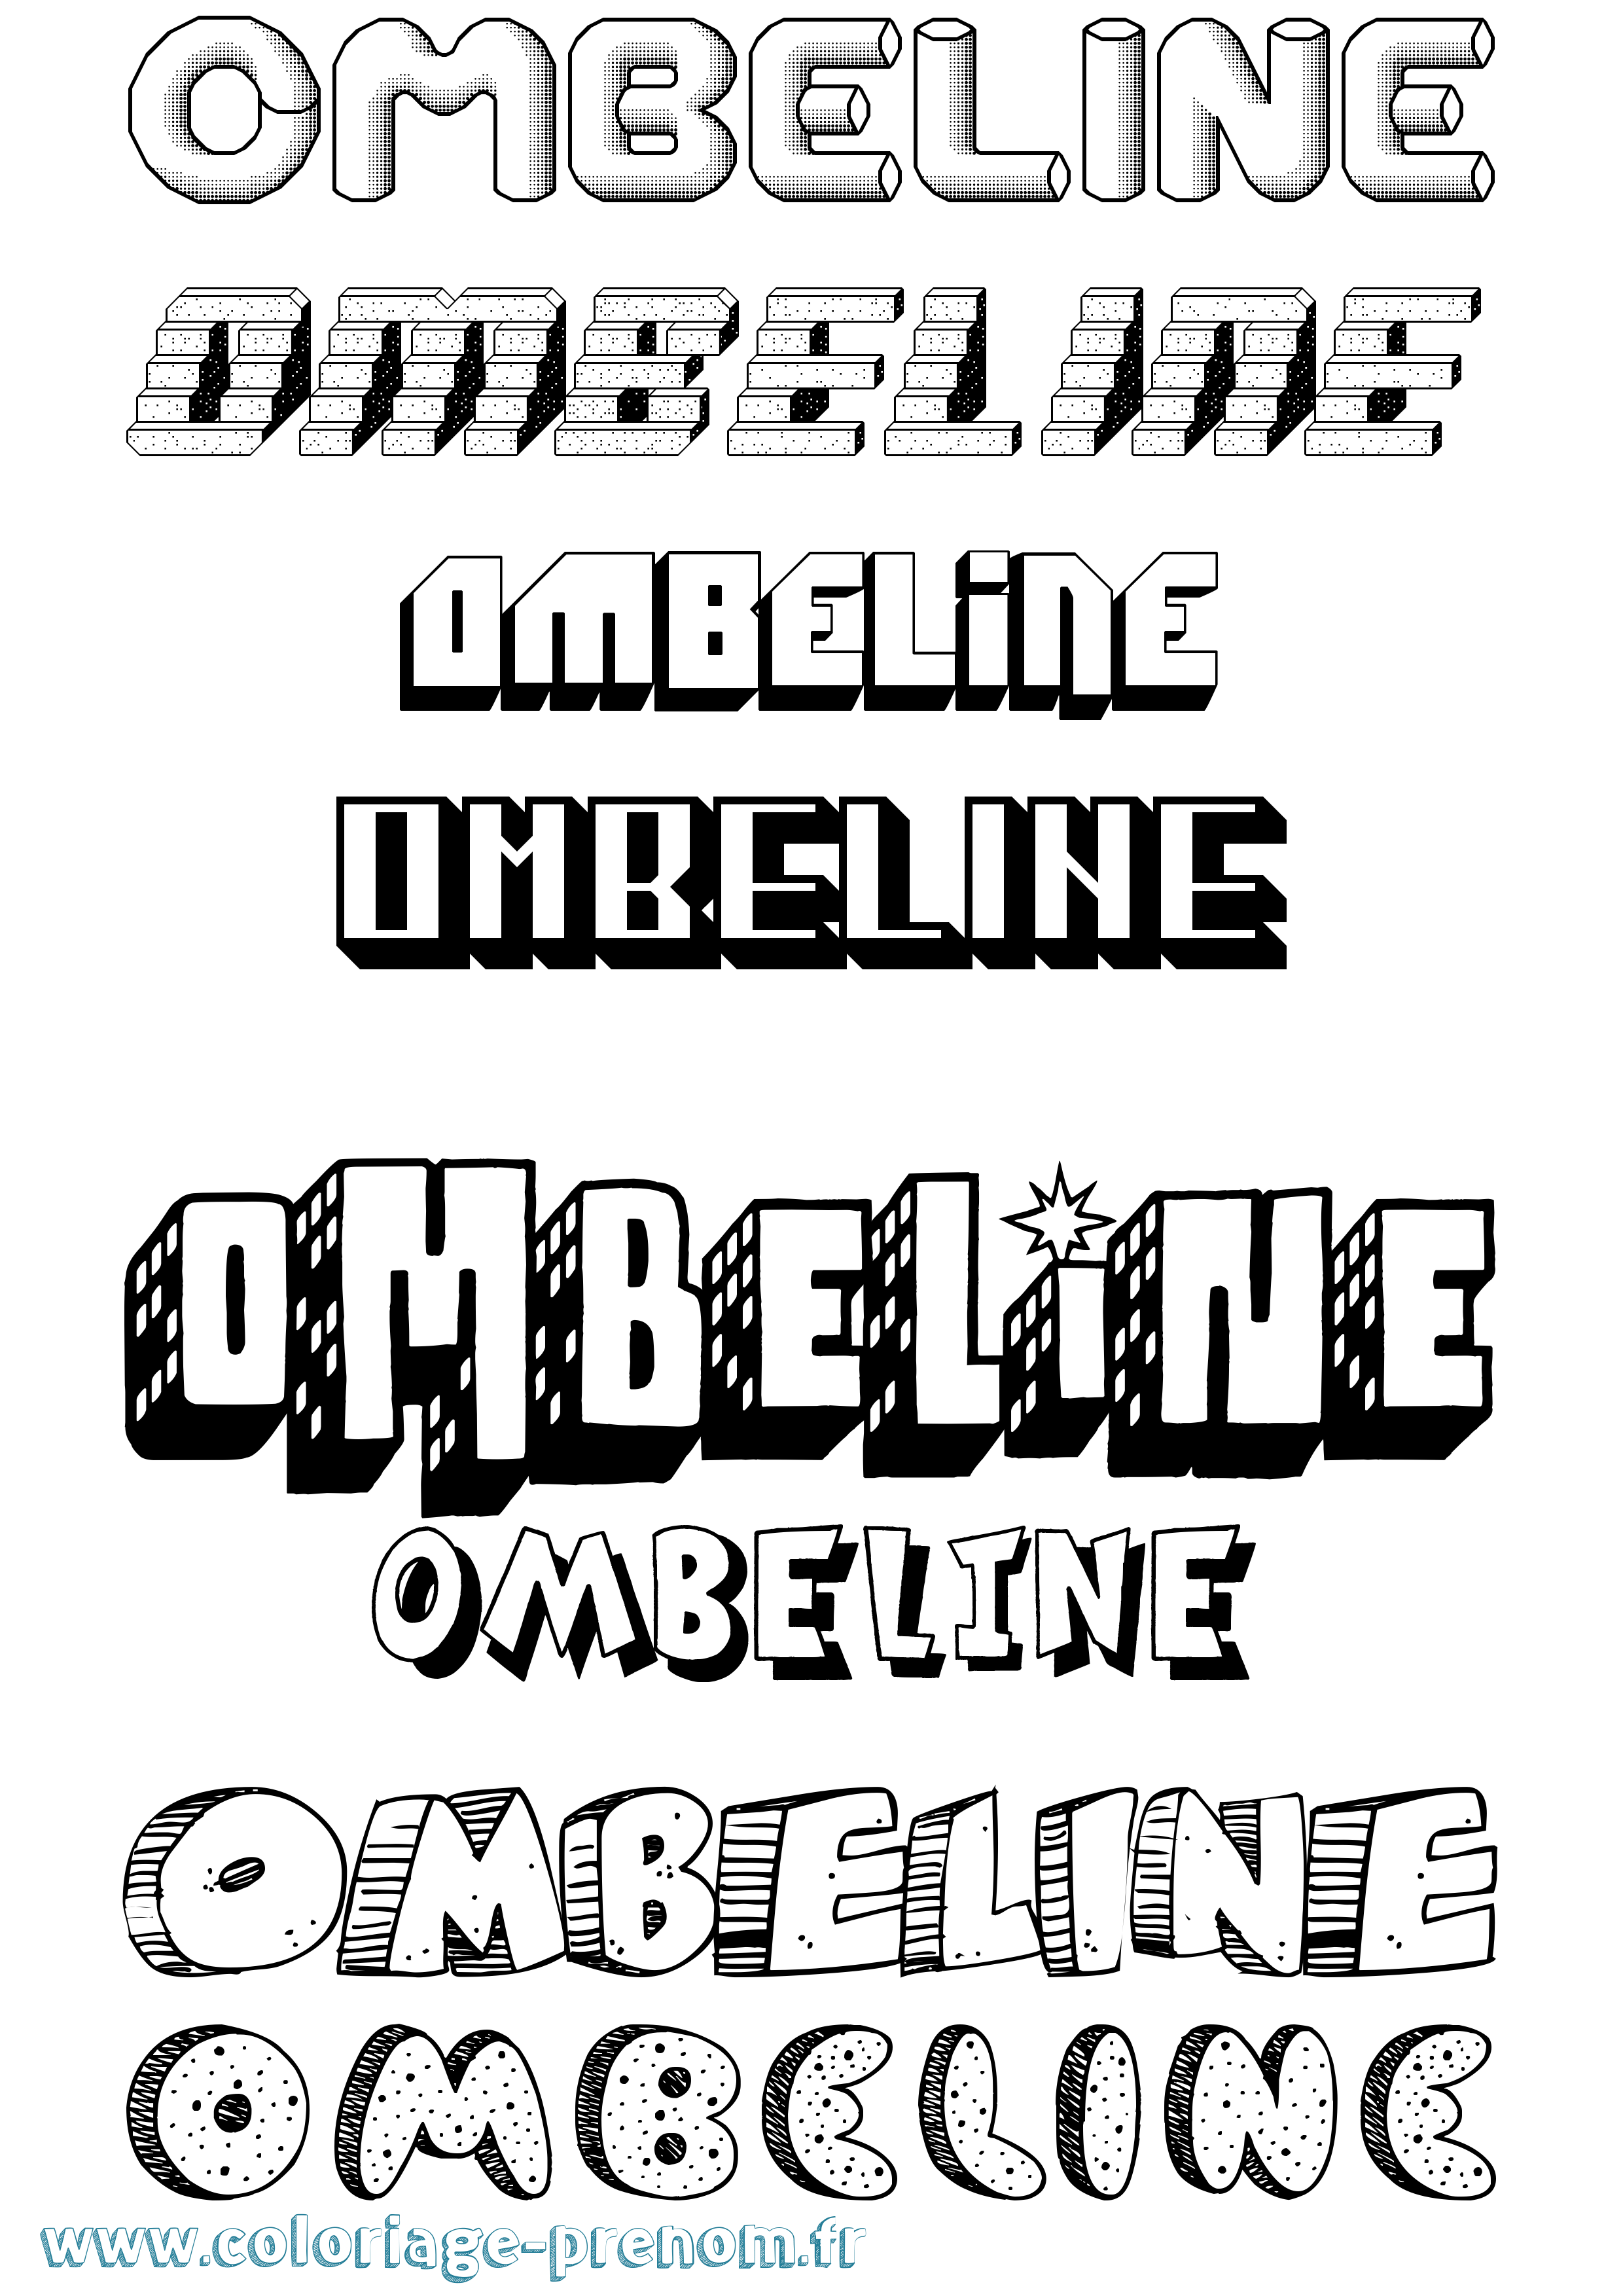 Coloriage prénom Ombeline